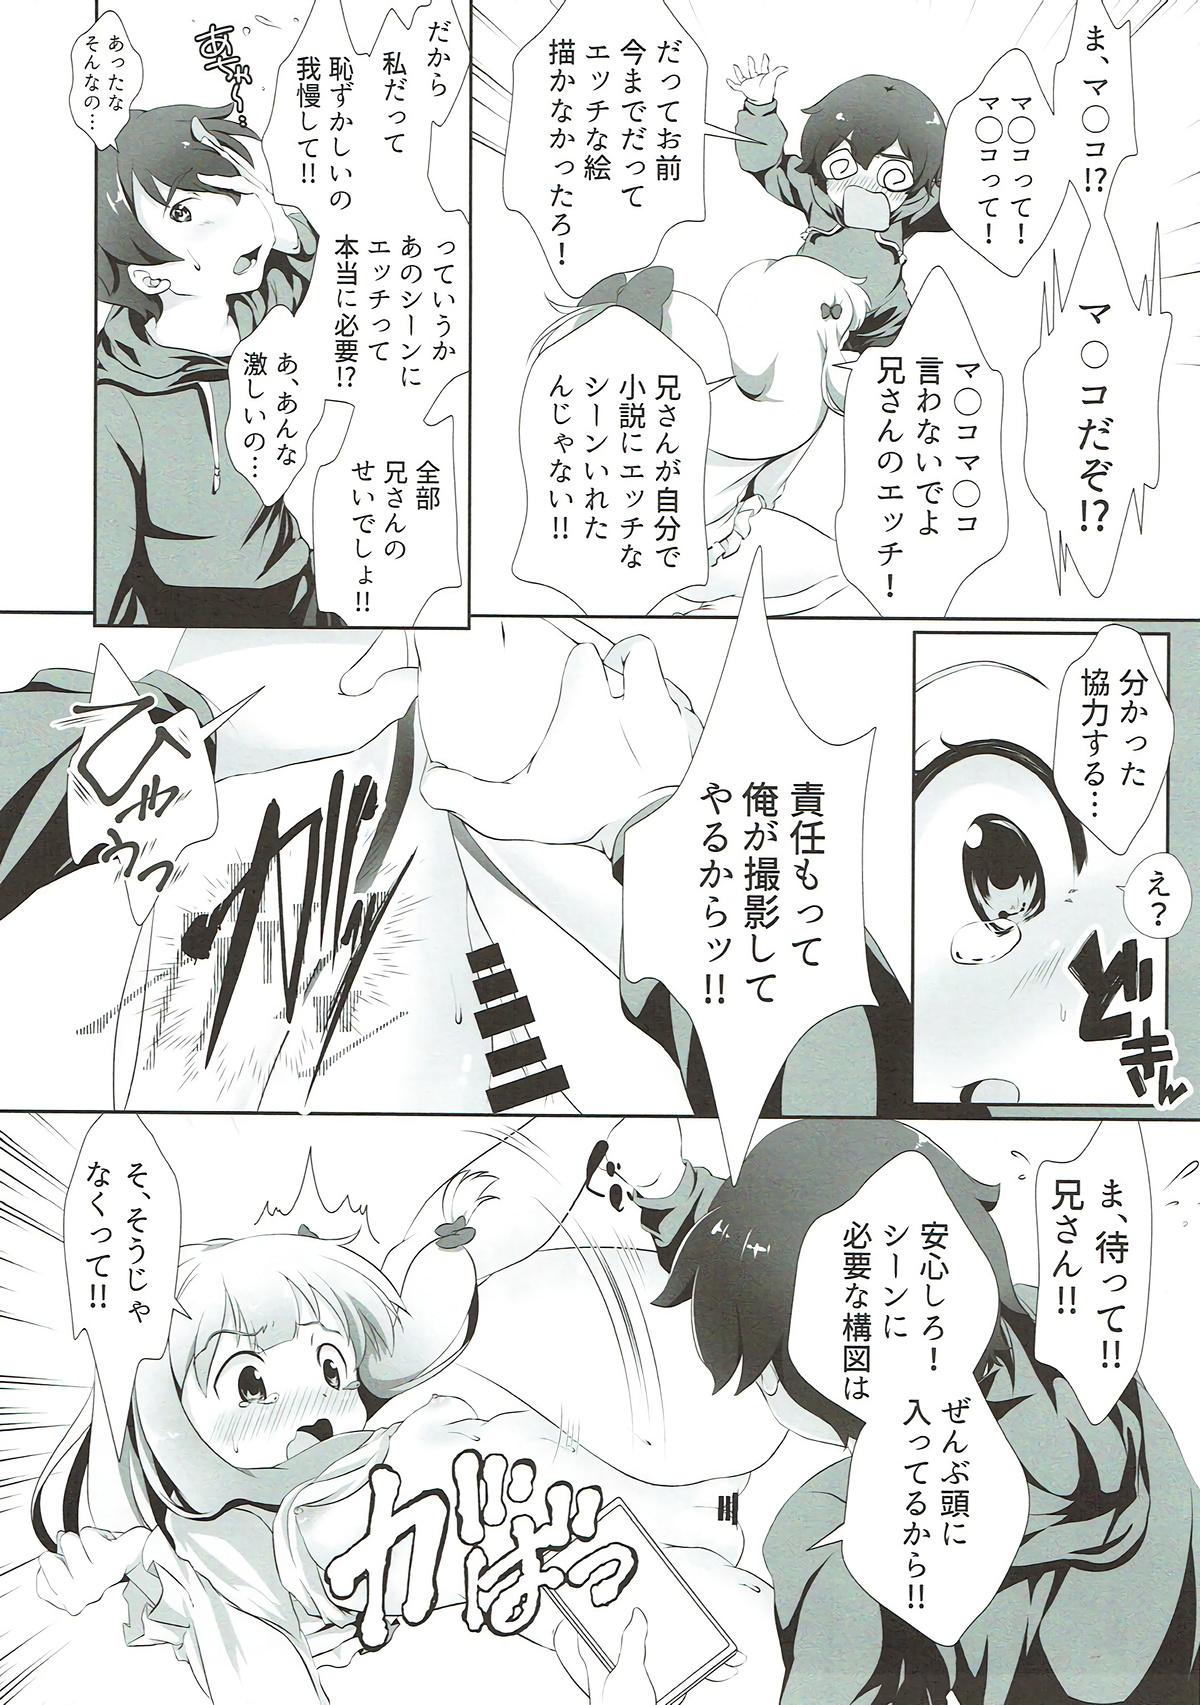 Culazo Nii-san... Dopyu Dopyu Shite - Eromanga sensei Tanned - Page 5